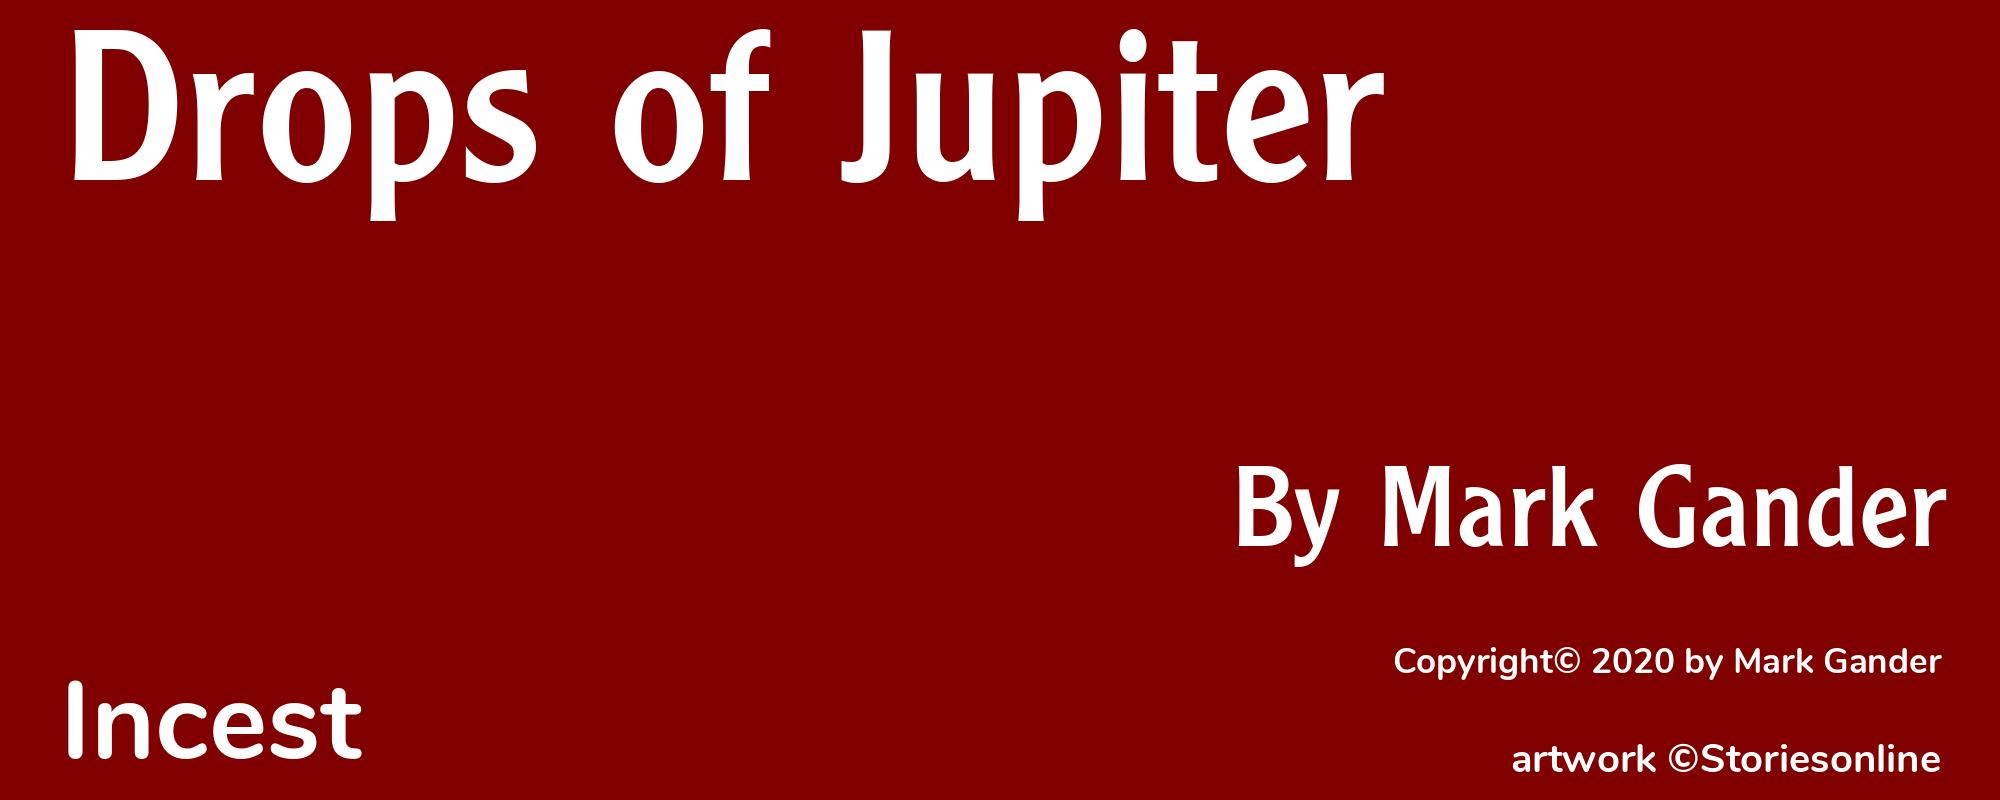 Drops of Jupiter - Cover